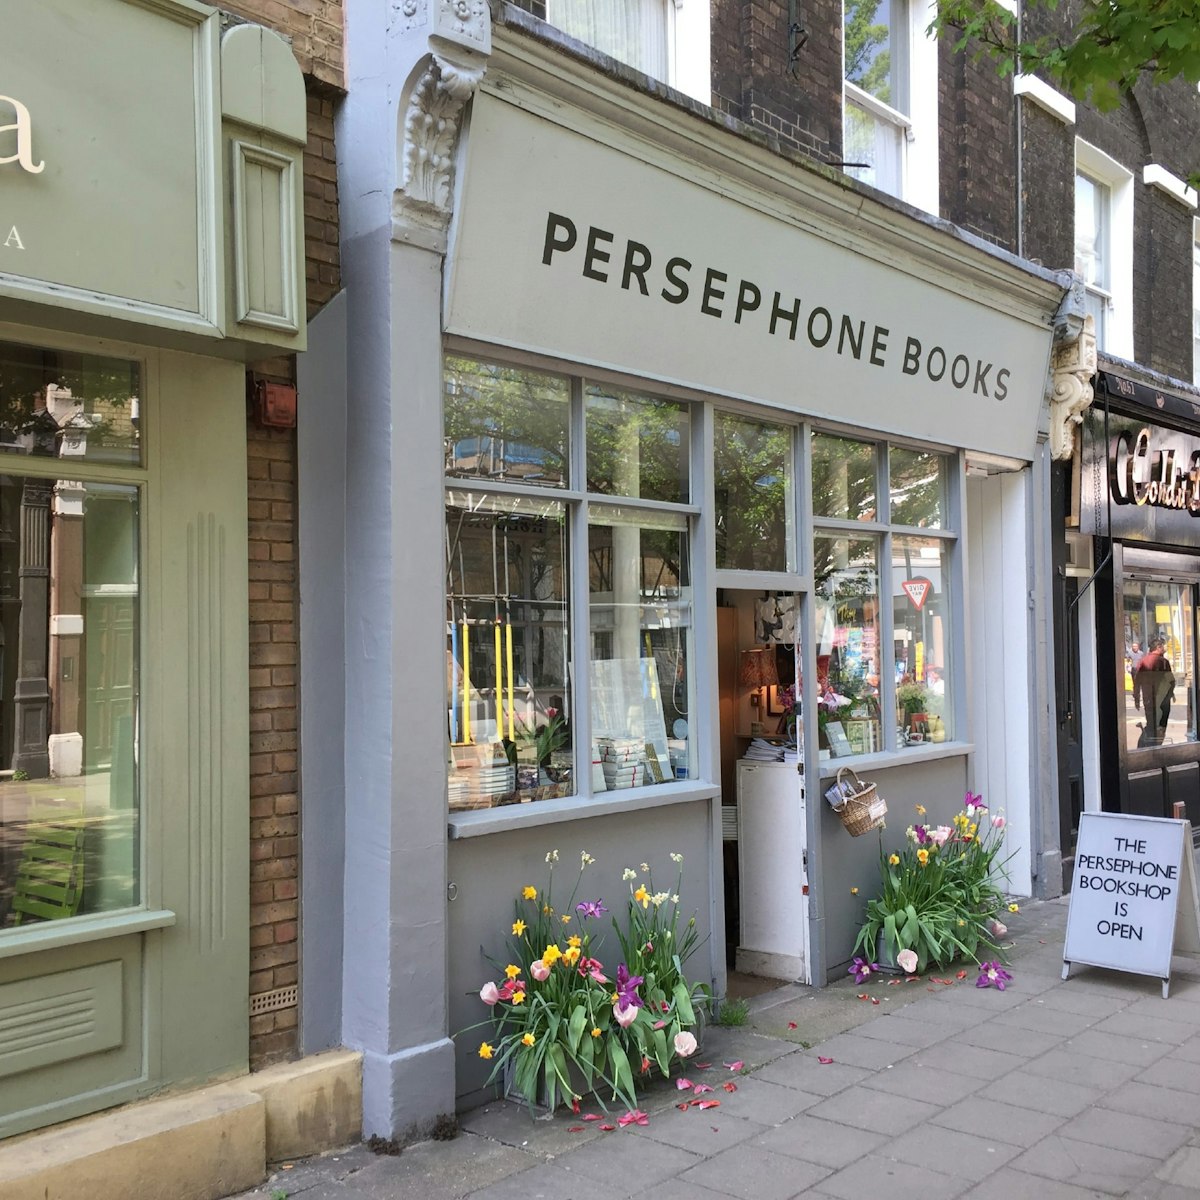 The exterior of Persephone Books